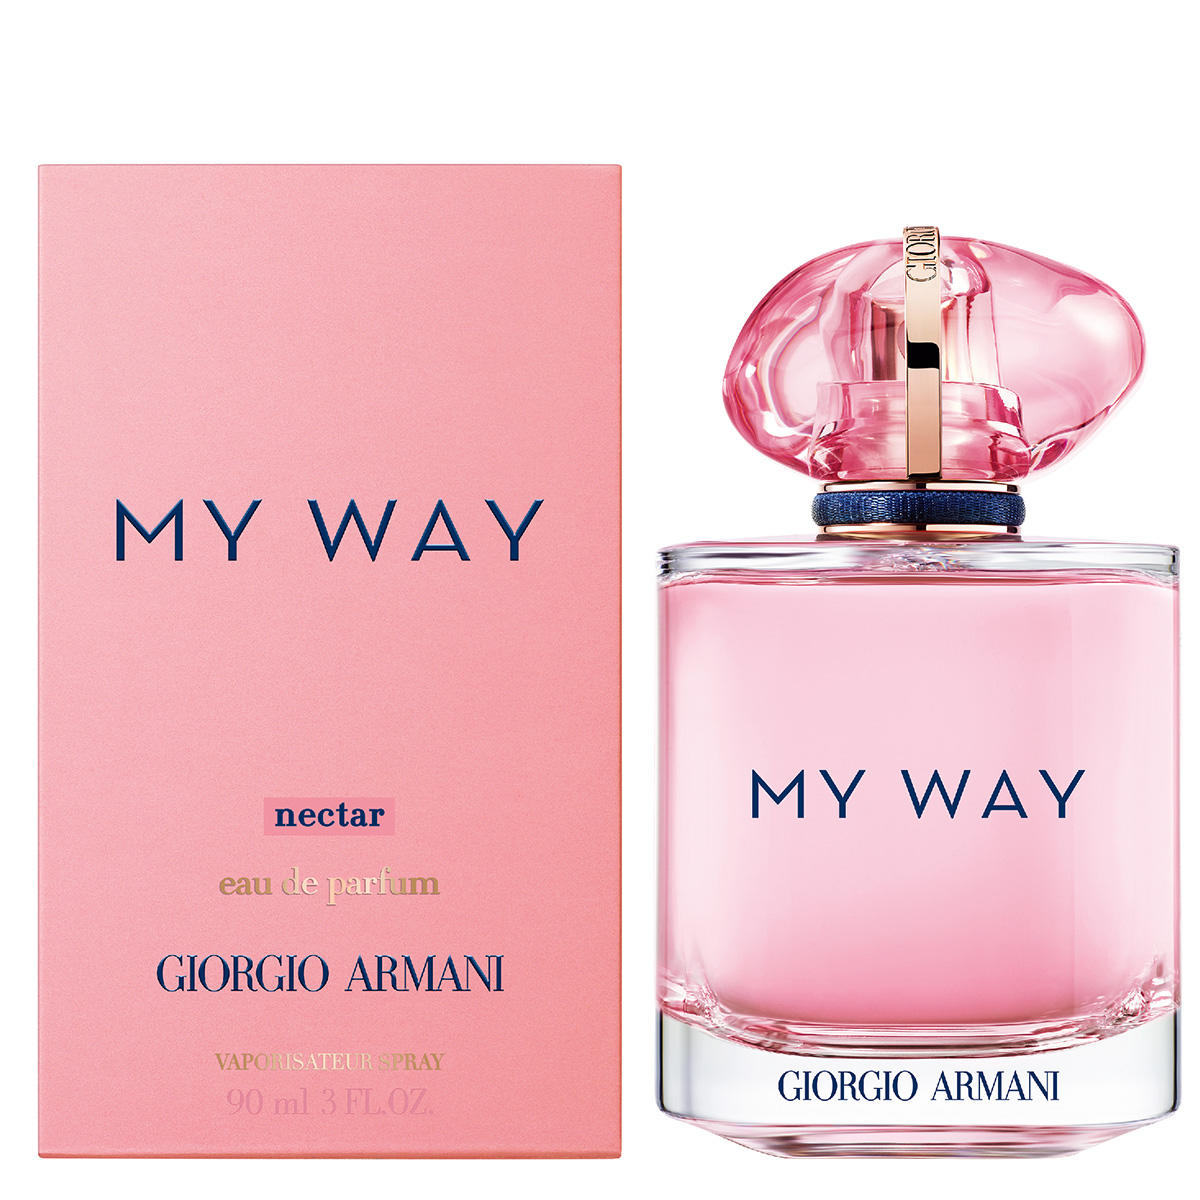 Giorgio Armani My Way Nectar Eau de Parfum 90 ml - 2